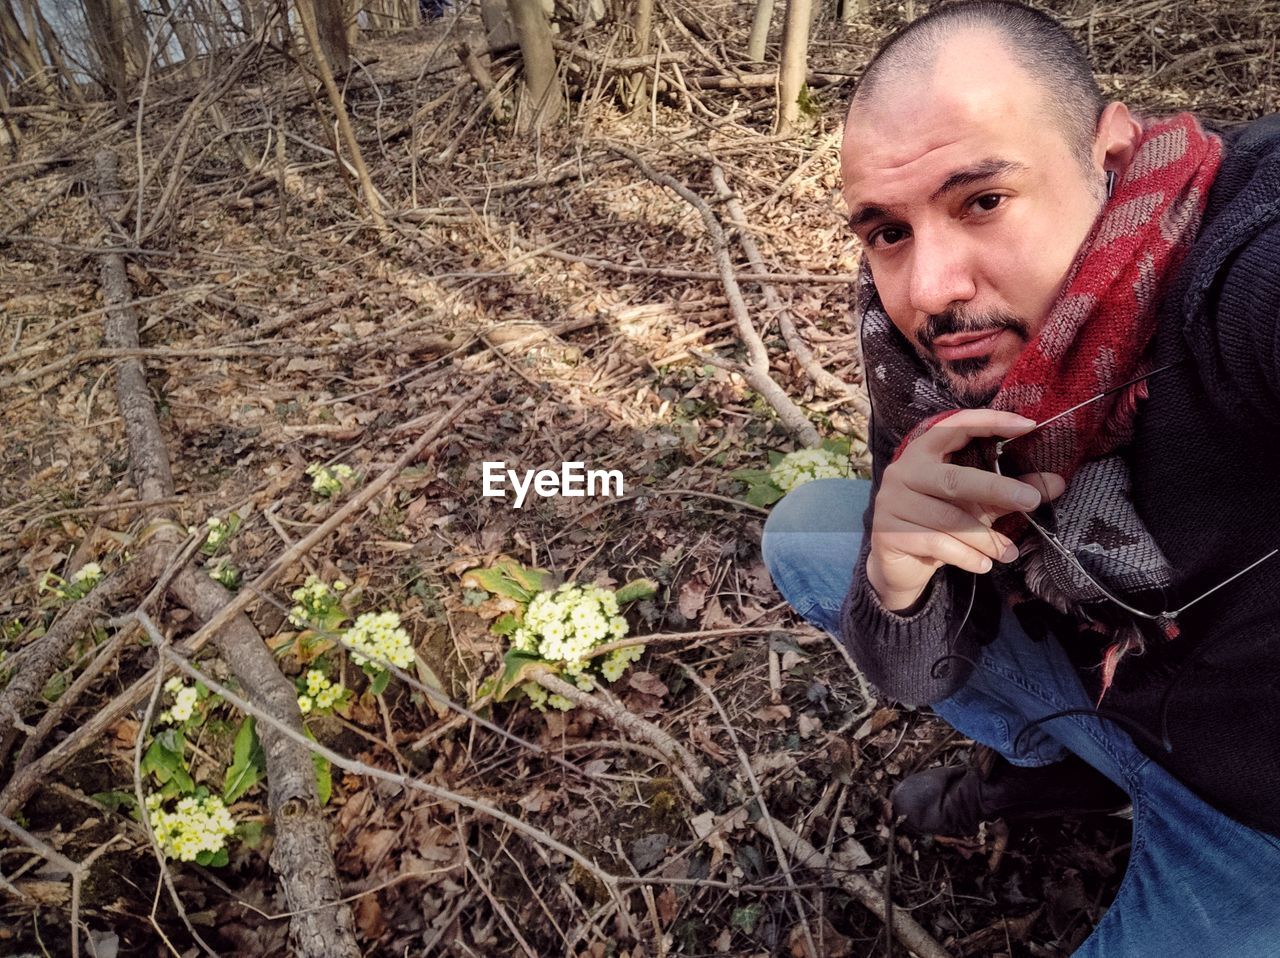 Selfie in the woods